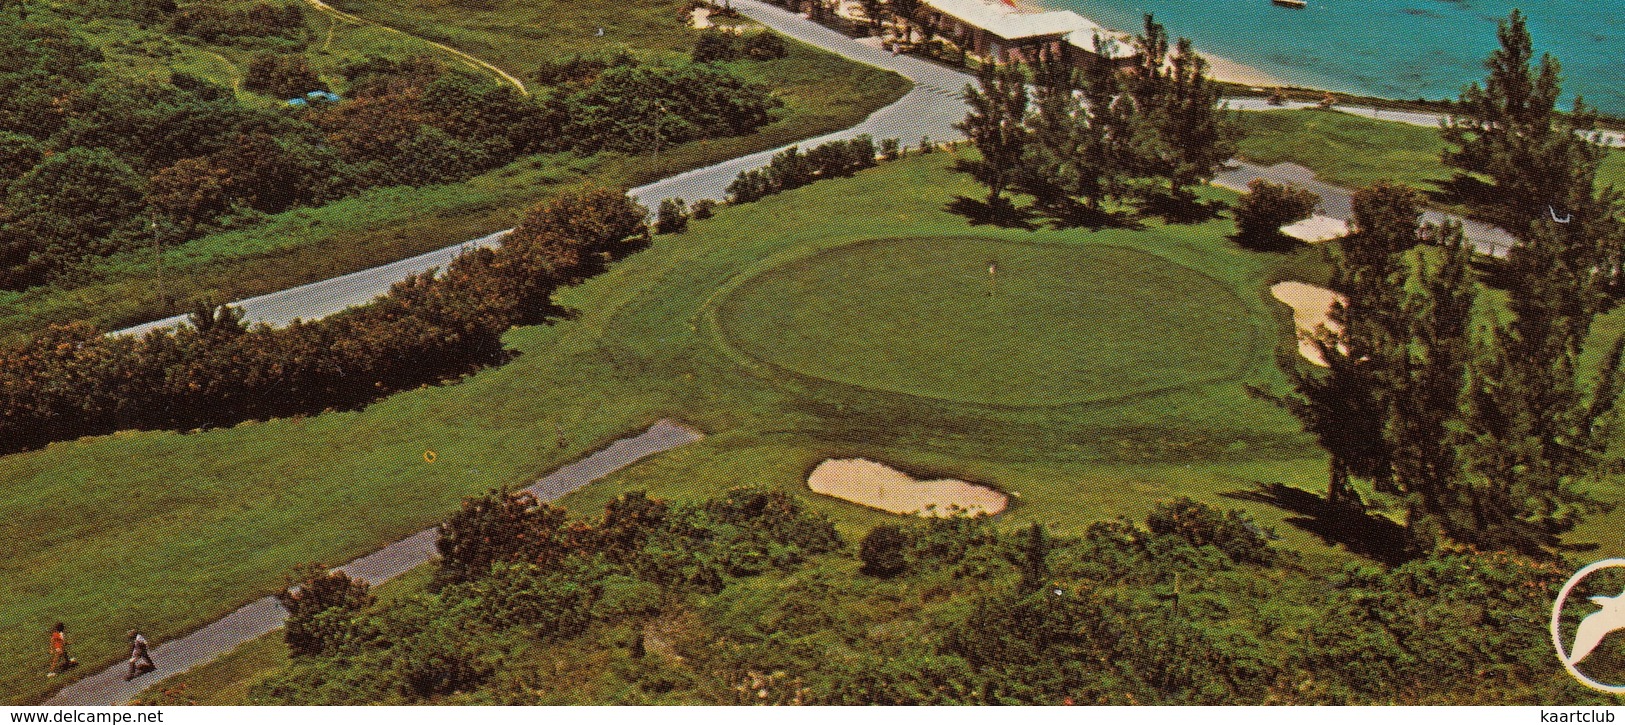 GOLF - St. Catherine's Point, Bermuda - Golf Course - Holiday Inn Hotel - Golf